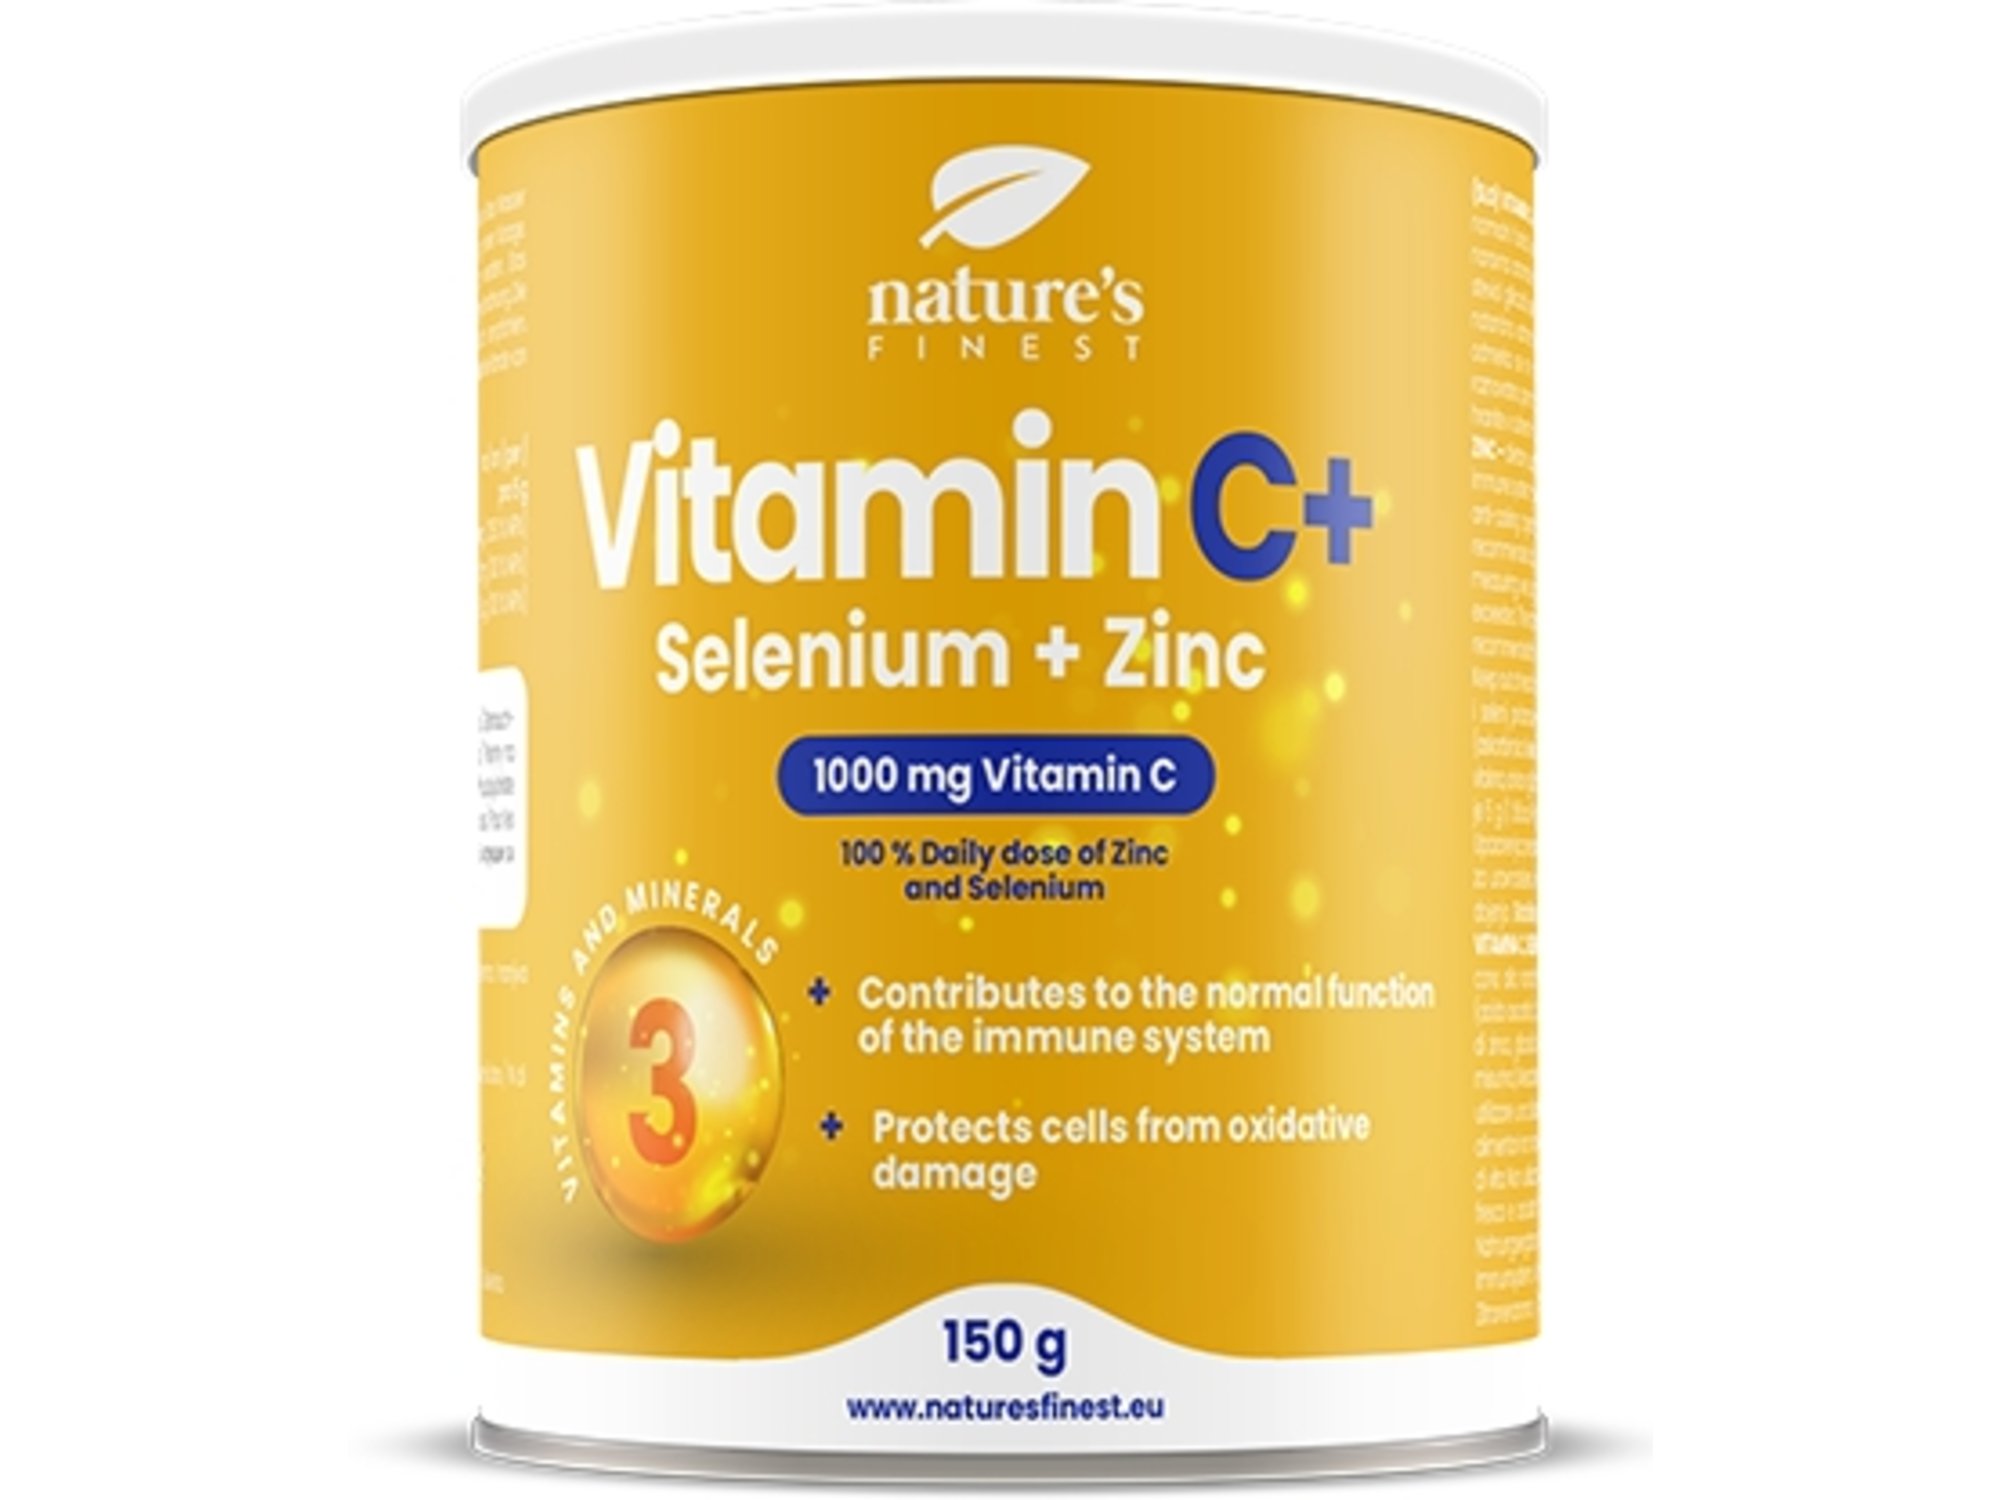 NATURES FINEST  napitek z vitaminom C+, selenom in cinkom, 150g